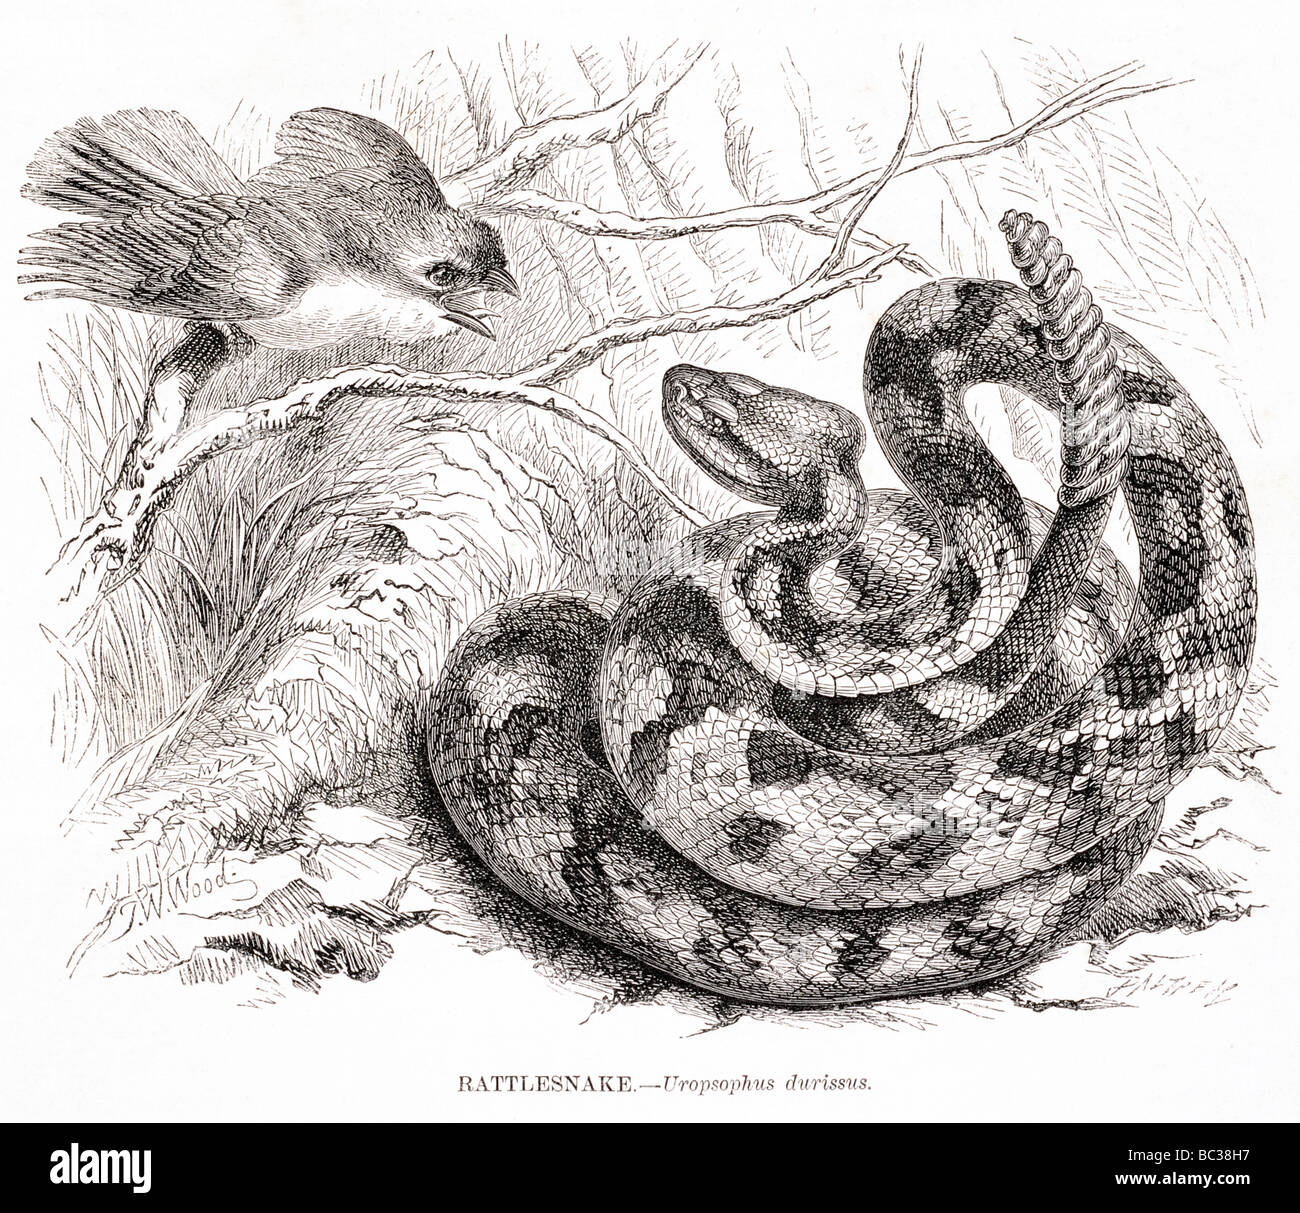 rattlesnake uropsophus durissus Stock Photo